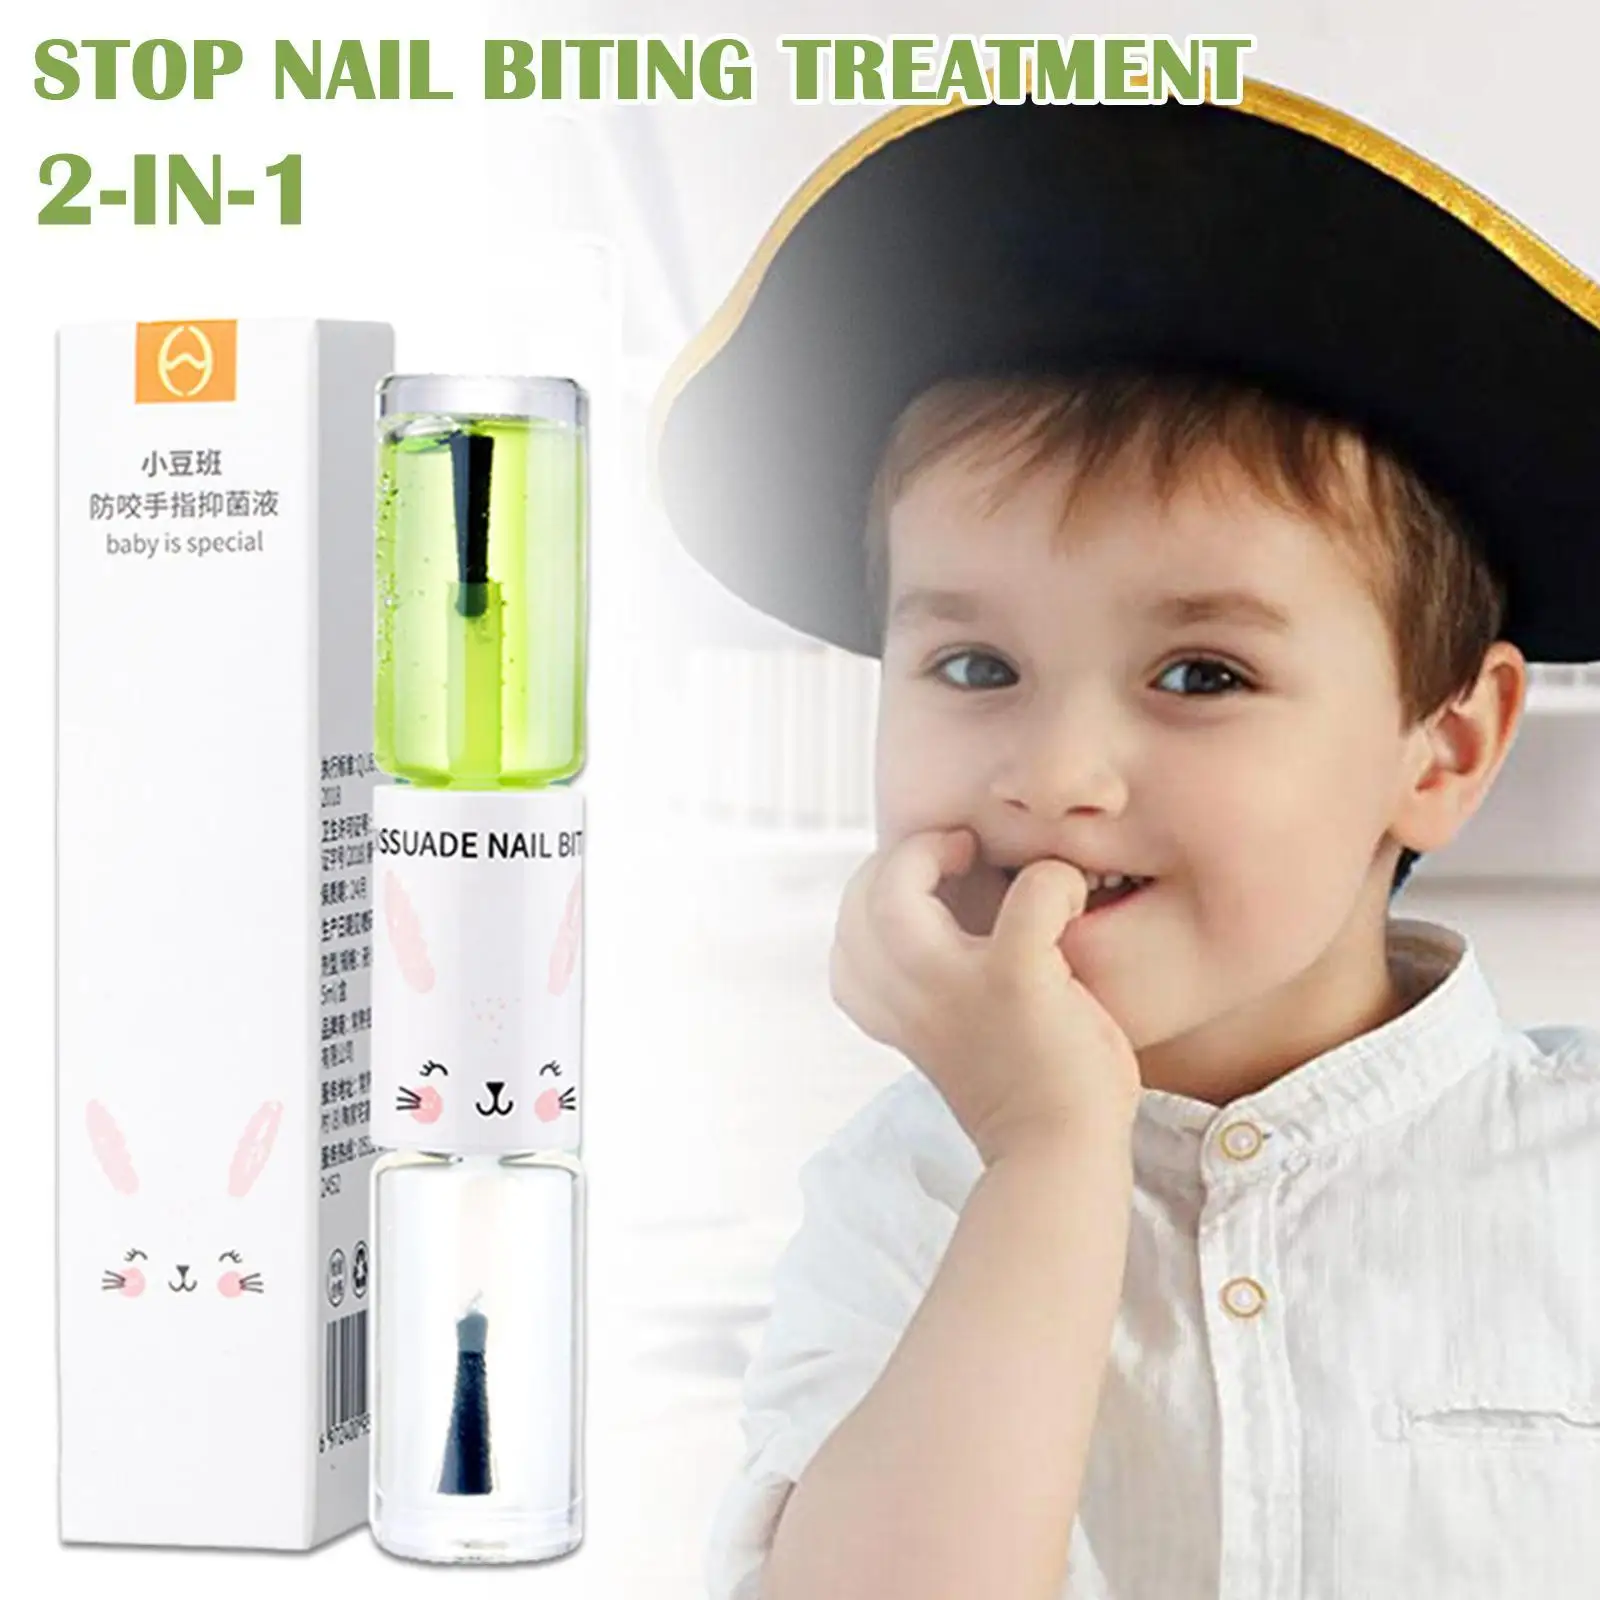 

Stop Nail Biting Treatment Nail Polish Bitter Cuticle Non-Toxic Healthy Oil Stop Sucking Thumb For Child Nail Health Care